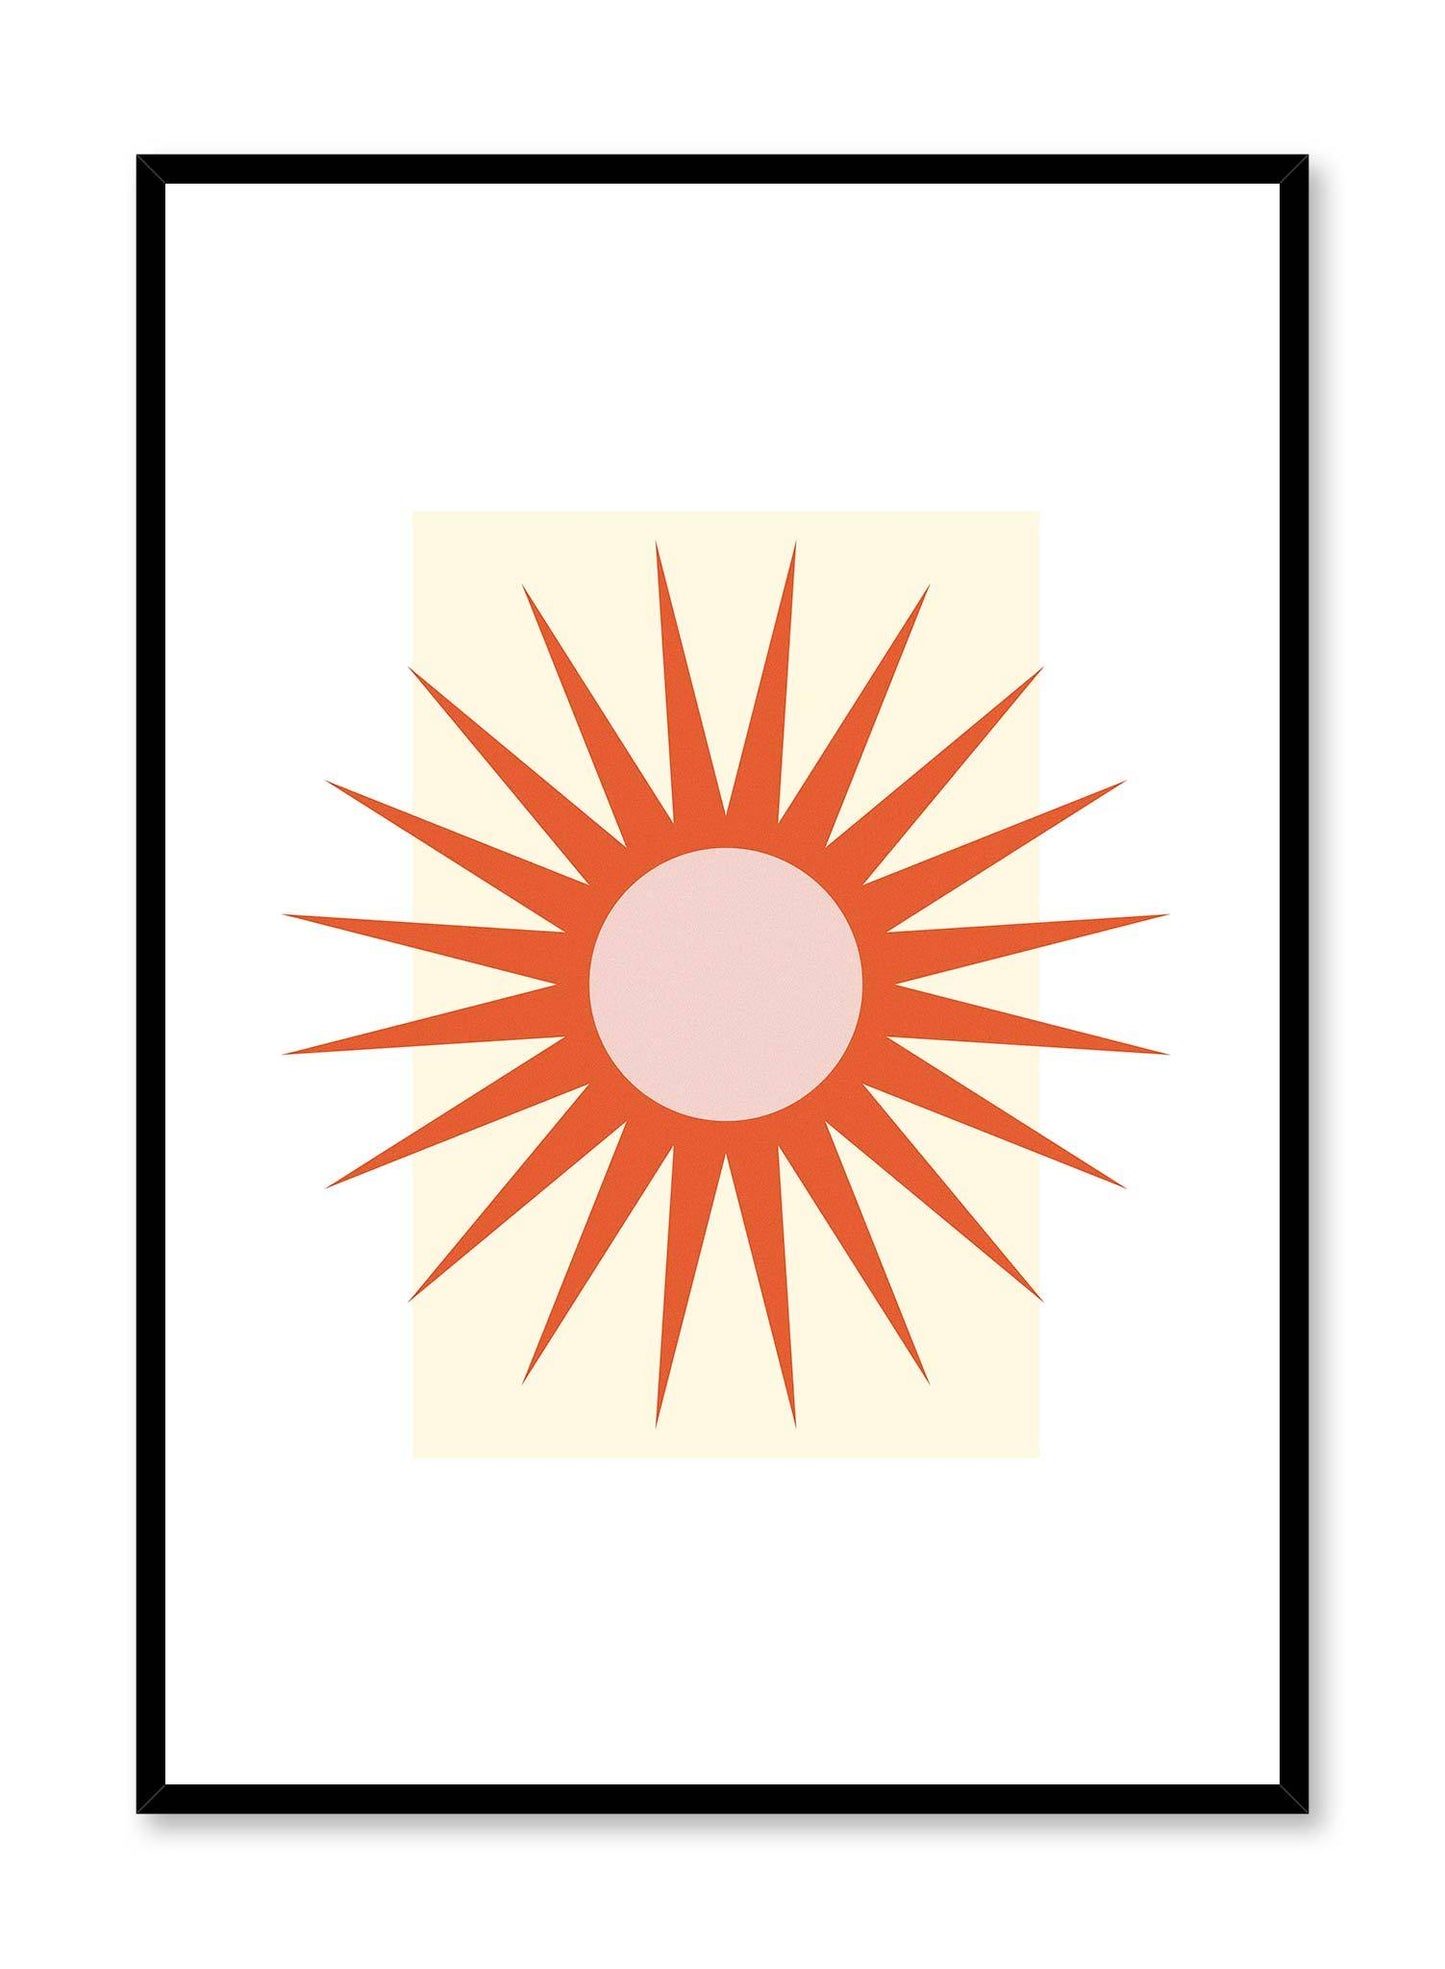 Minimalist Sun is a minimalist illustration poster of a blazing sun by Opposite Wall.